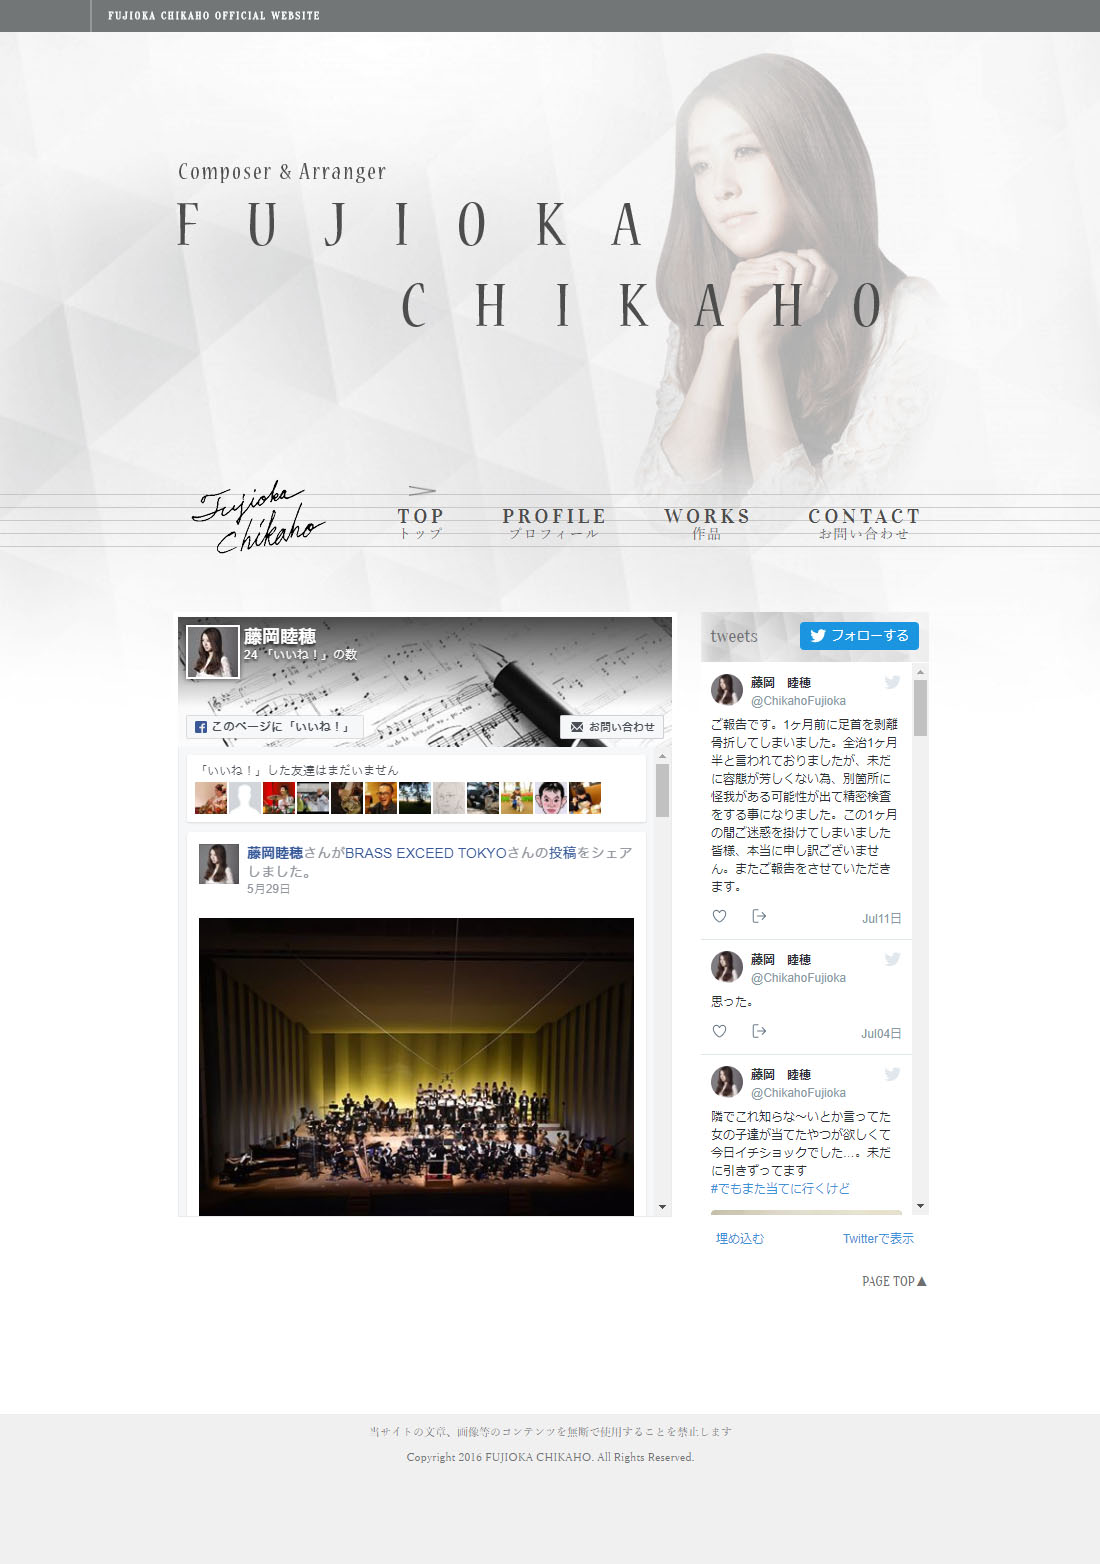 FUJIOKA CHIKAHO OFFICAL WEBSITE